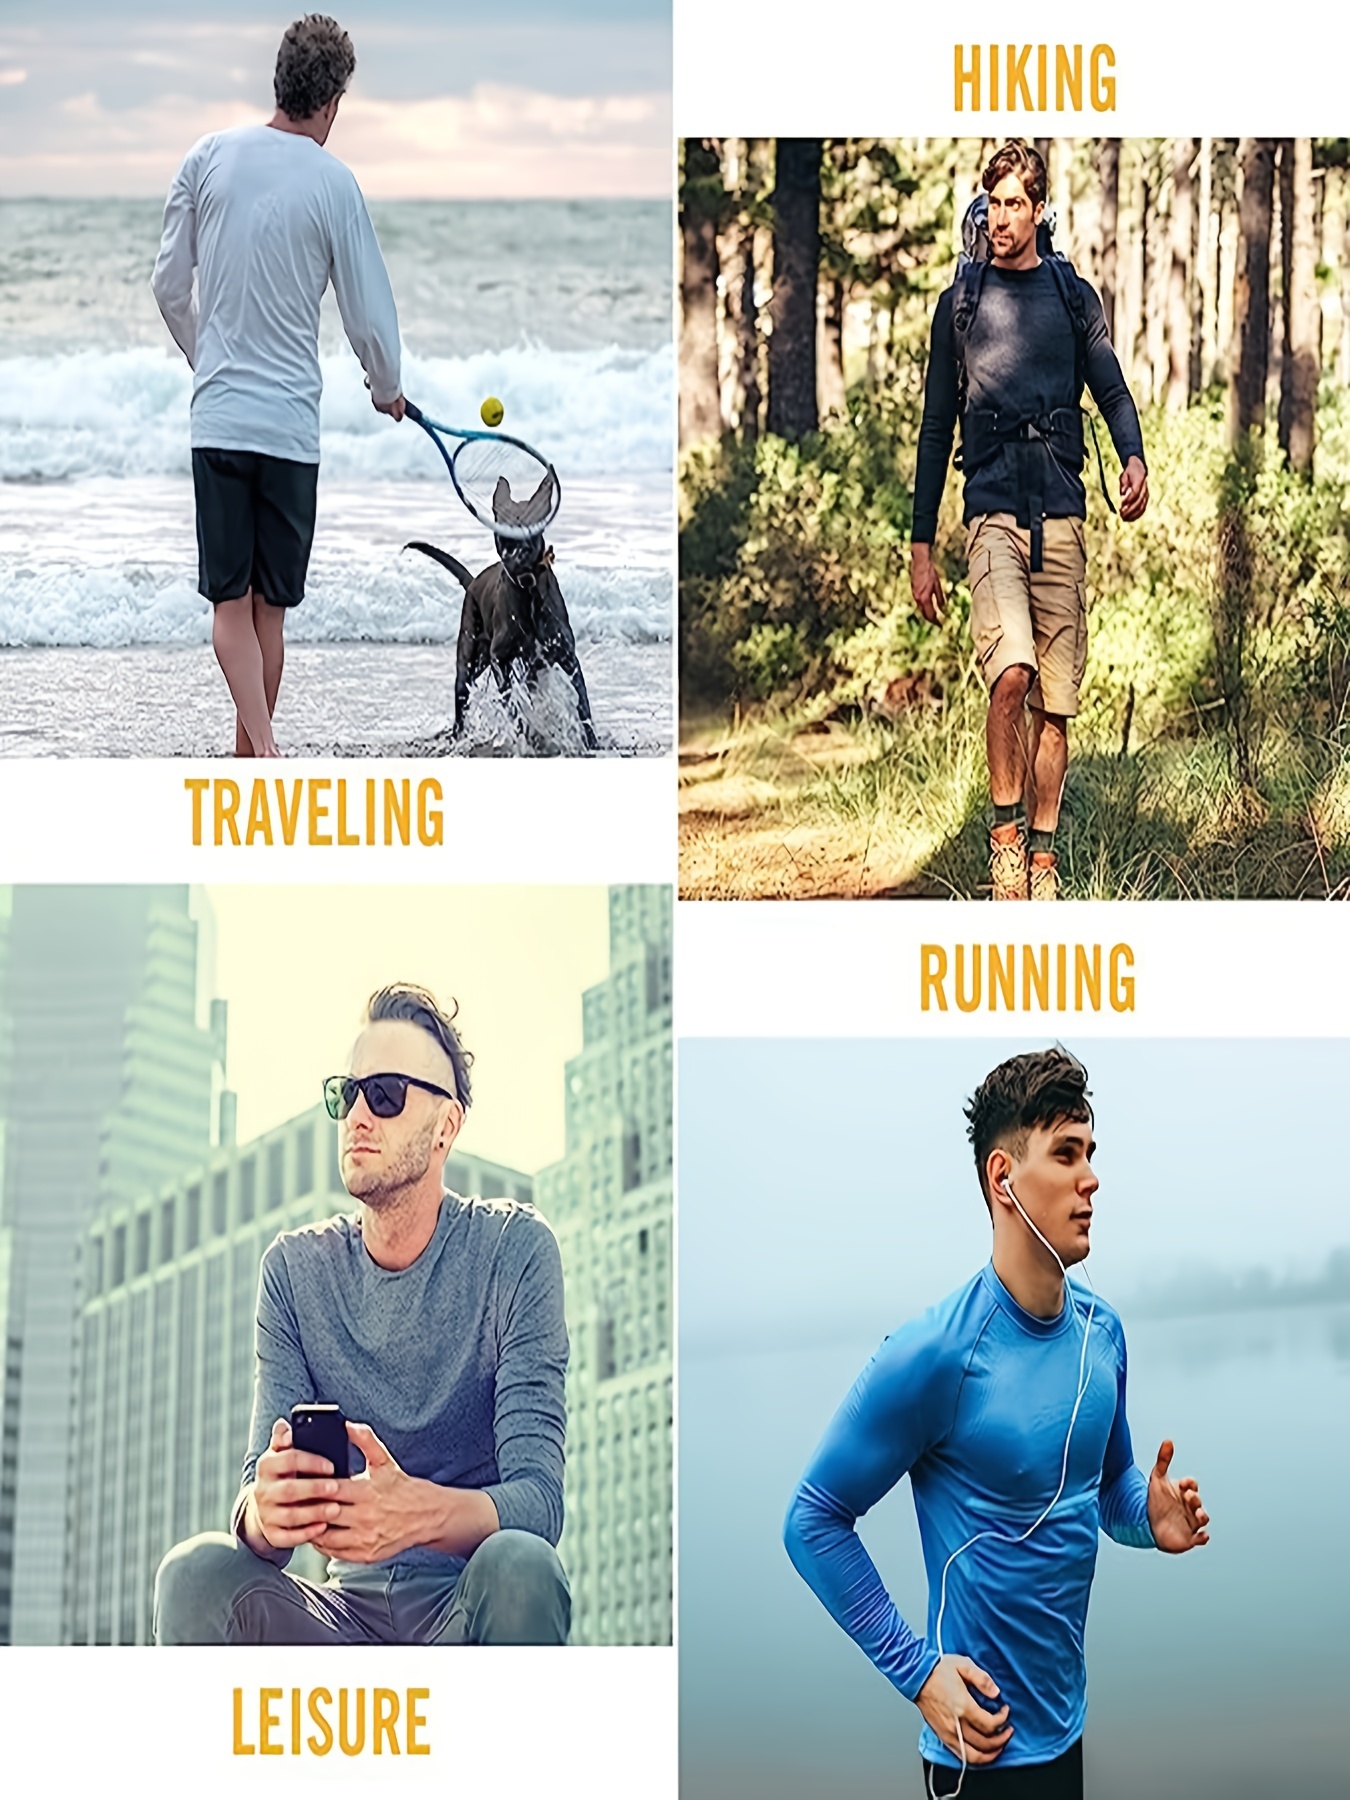 Men's Sun Protection Hoodie Outdoor Long Sleeve Sweatshirts for Running,  Fishing, Hiking, Black, M